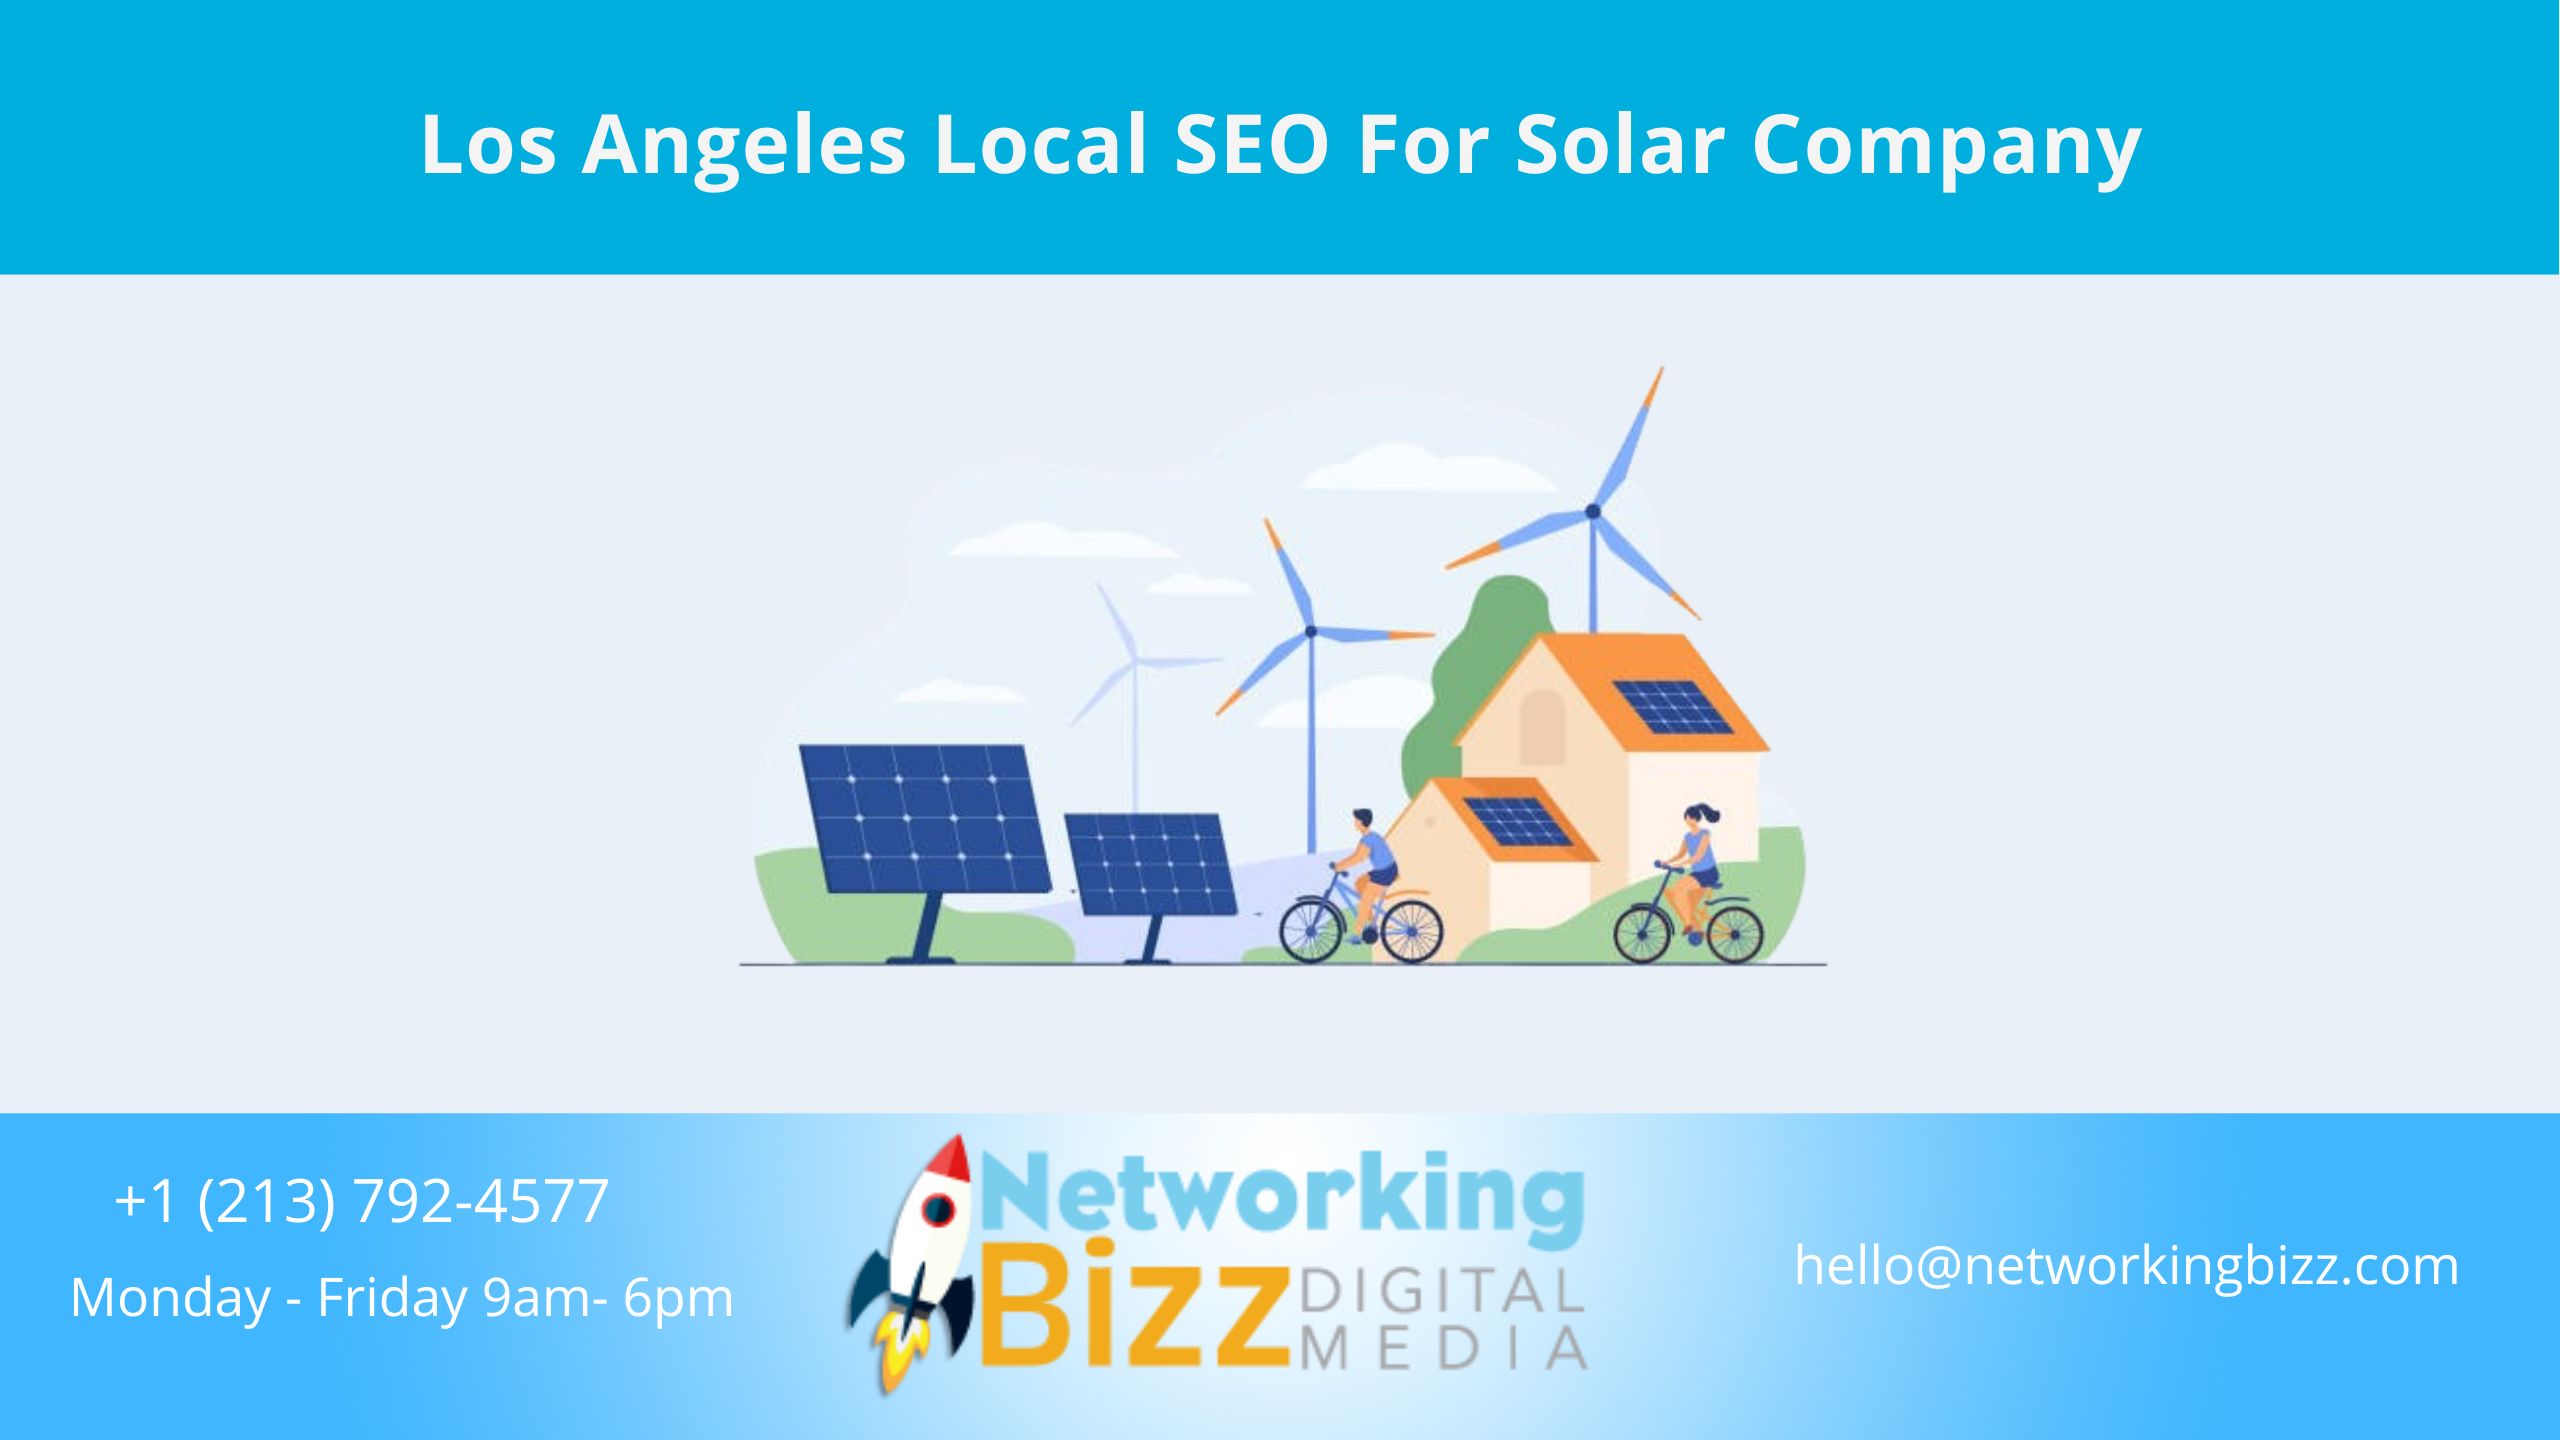 Los Angeles Local SEO For Solar Company